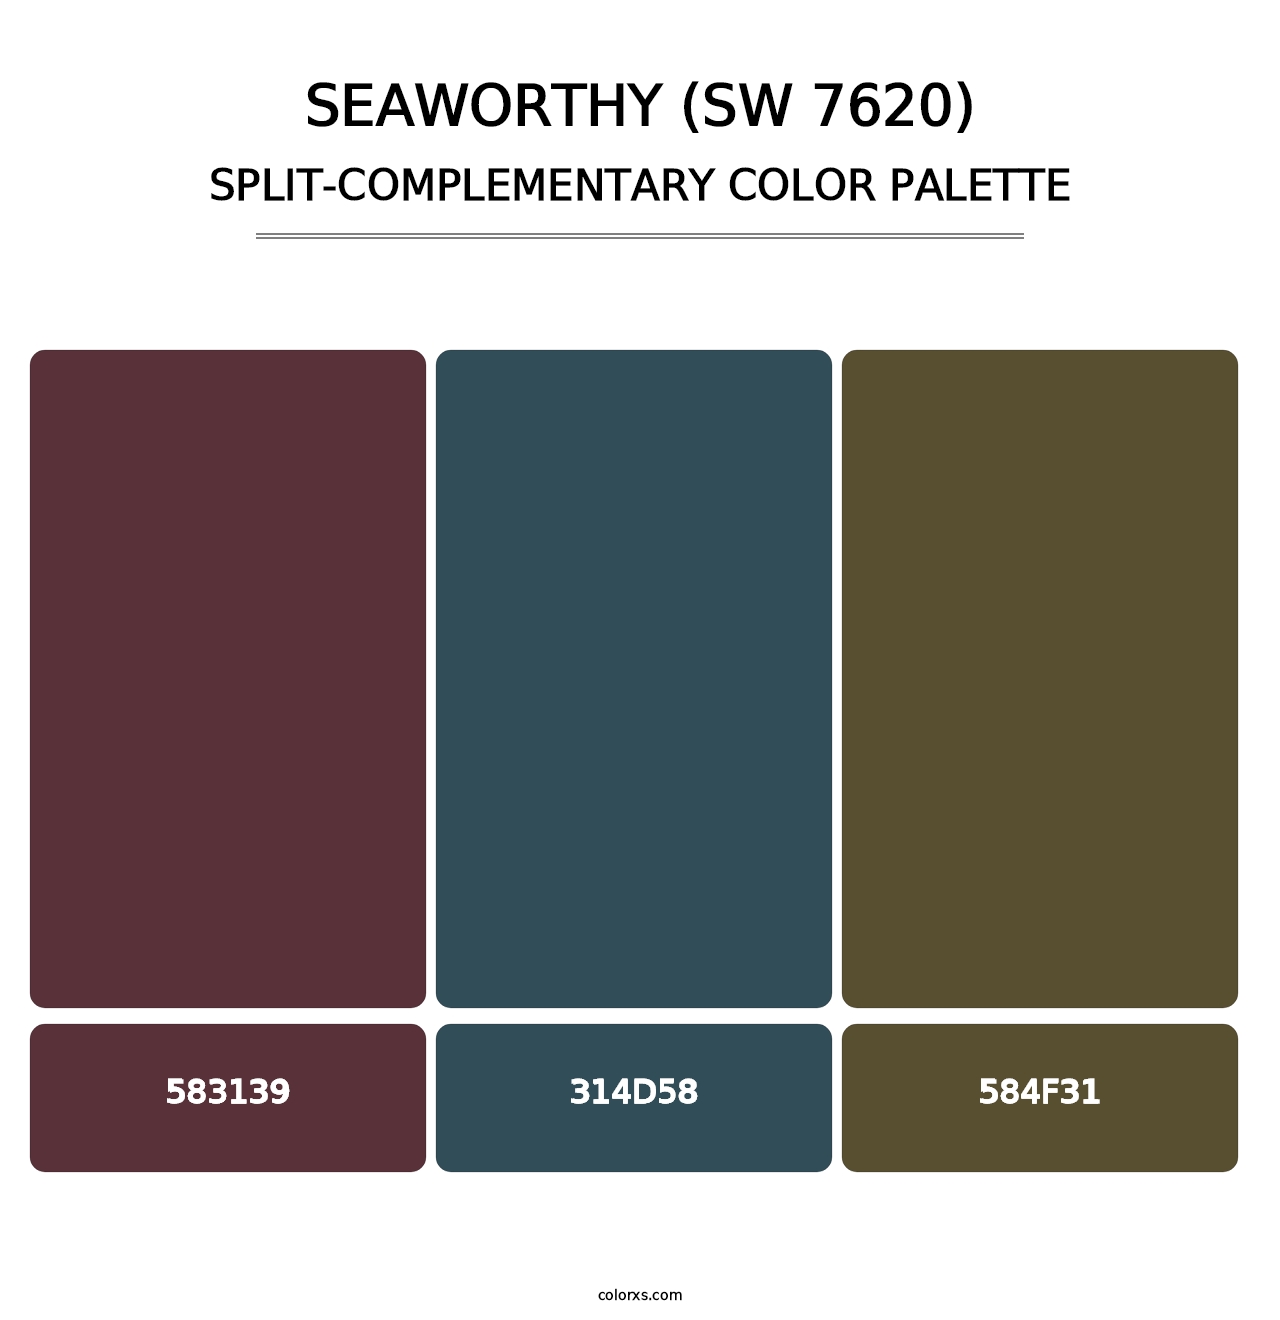 Seaworthy (SW 7620) - Split-Complementary Color Palette